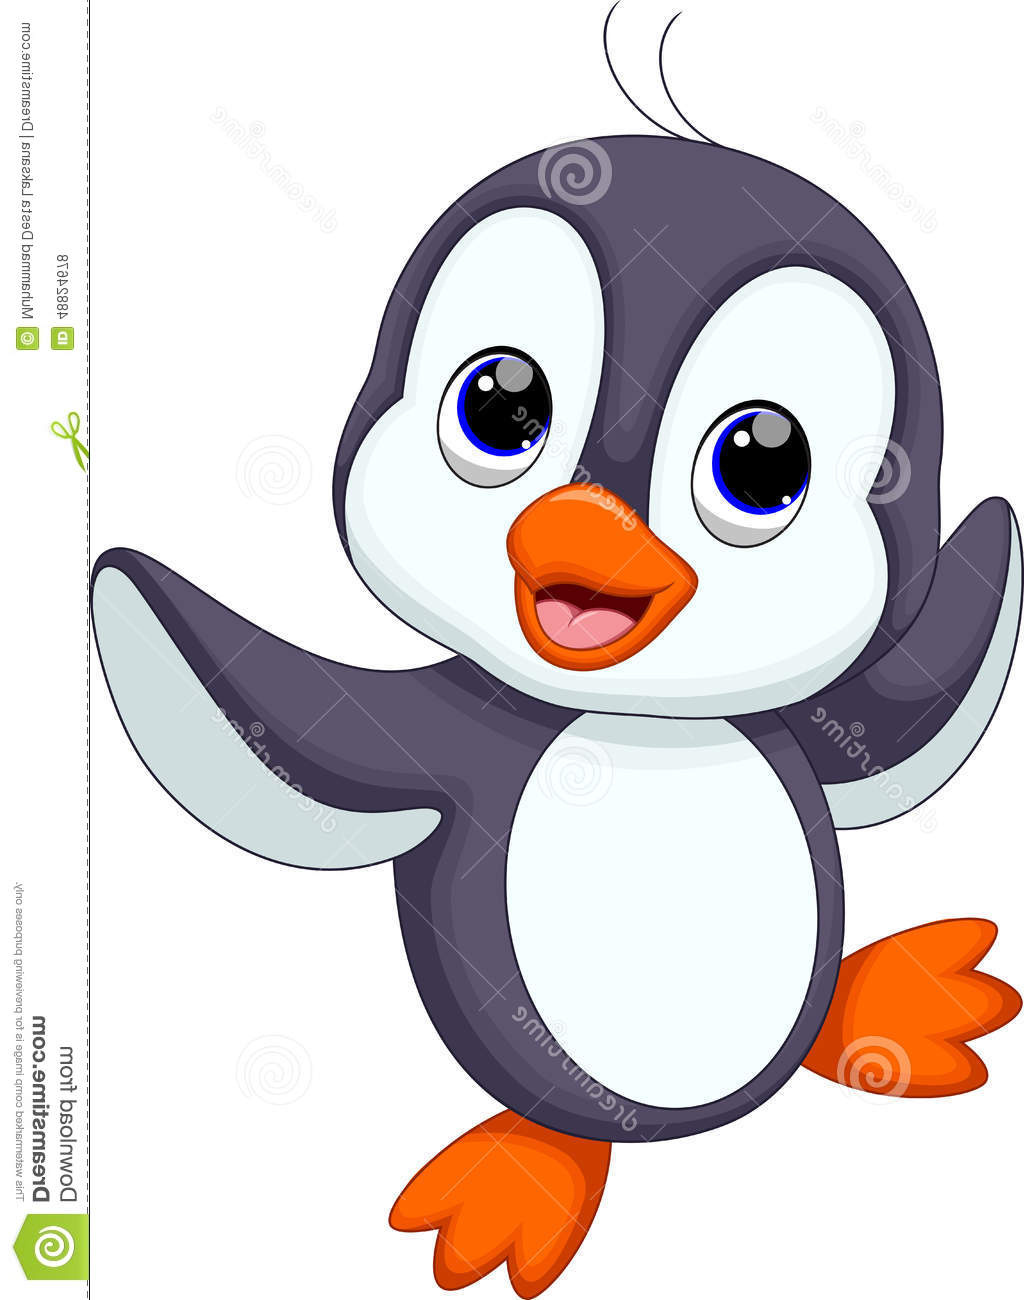 illustration stock dessin anim mignon de pingouin image